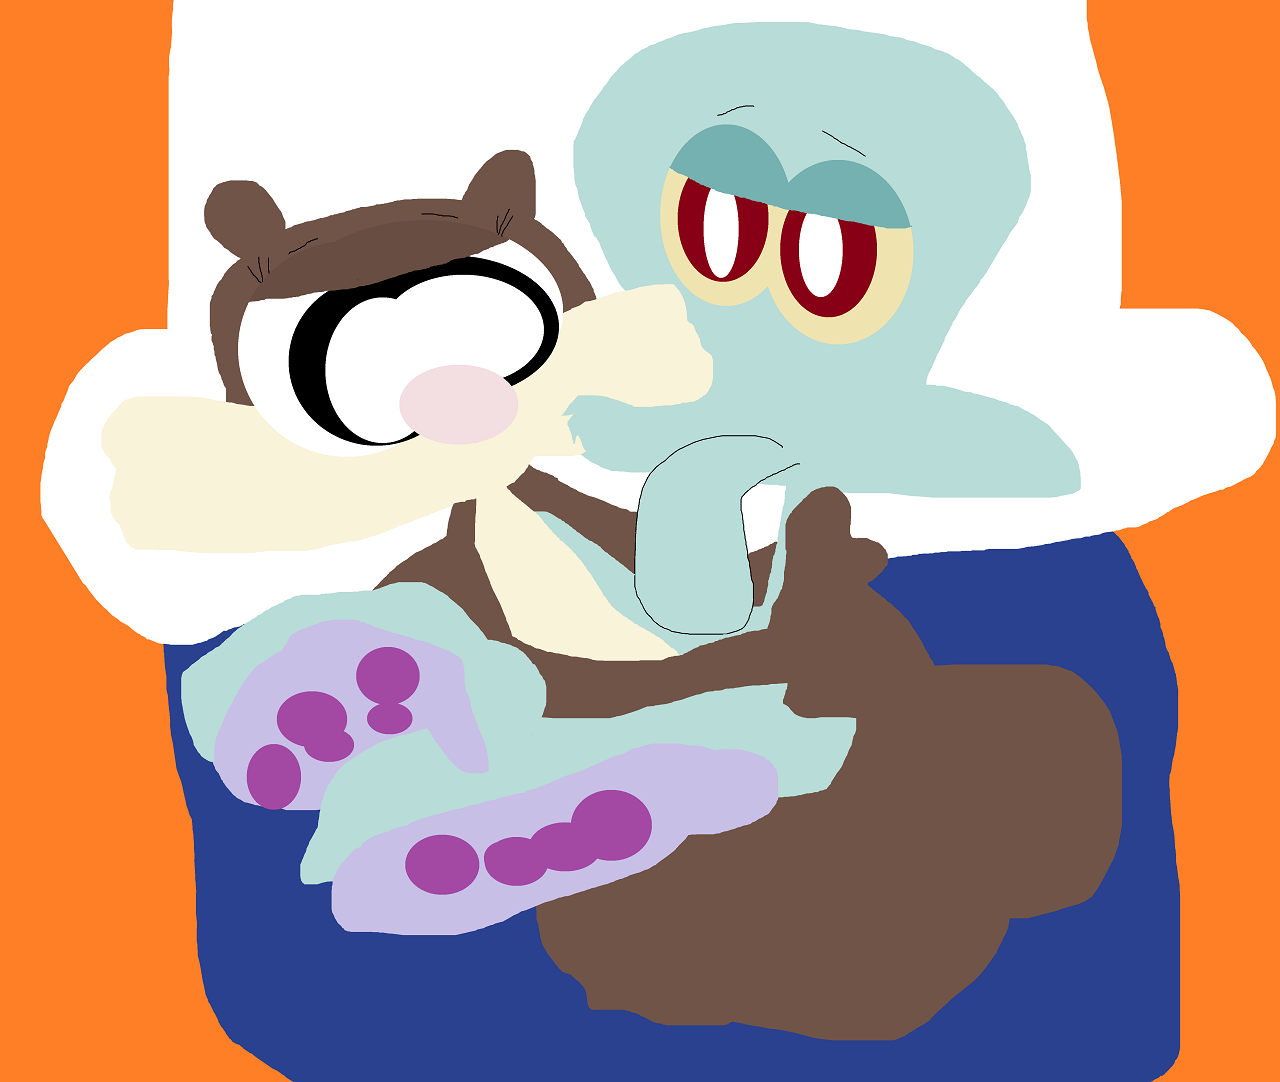 Squidward Sandy Snuggling In Bed by Falconlobo